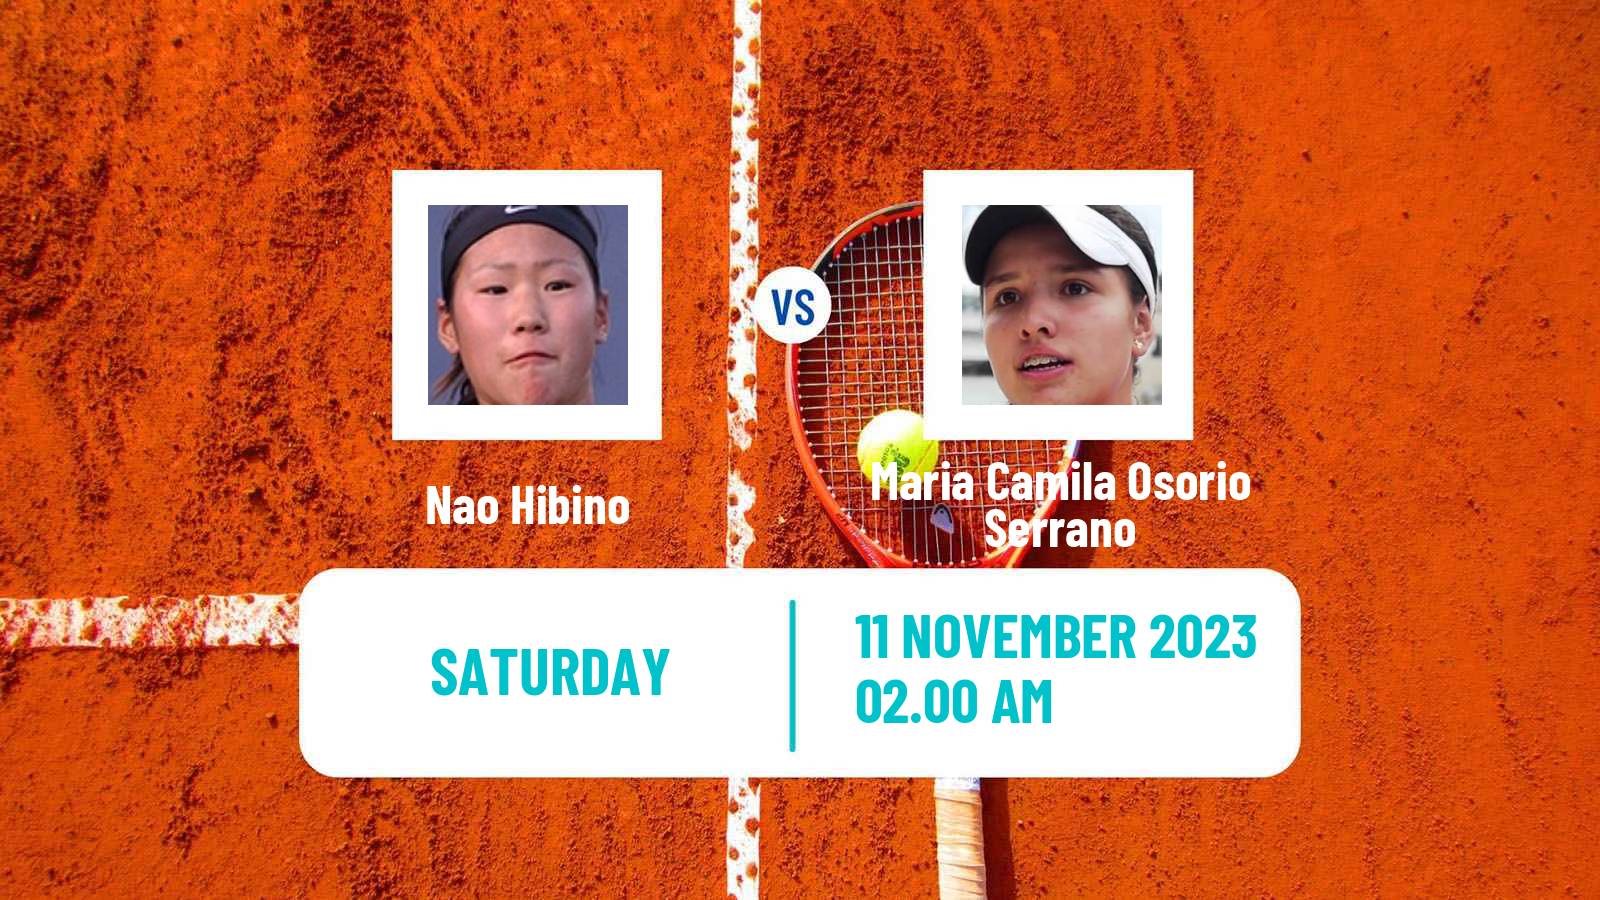 Tennis WTA Billie Jean King Cup World Group Nao Hibino - Maria Camila Osorio Serrano